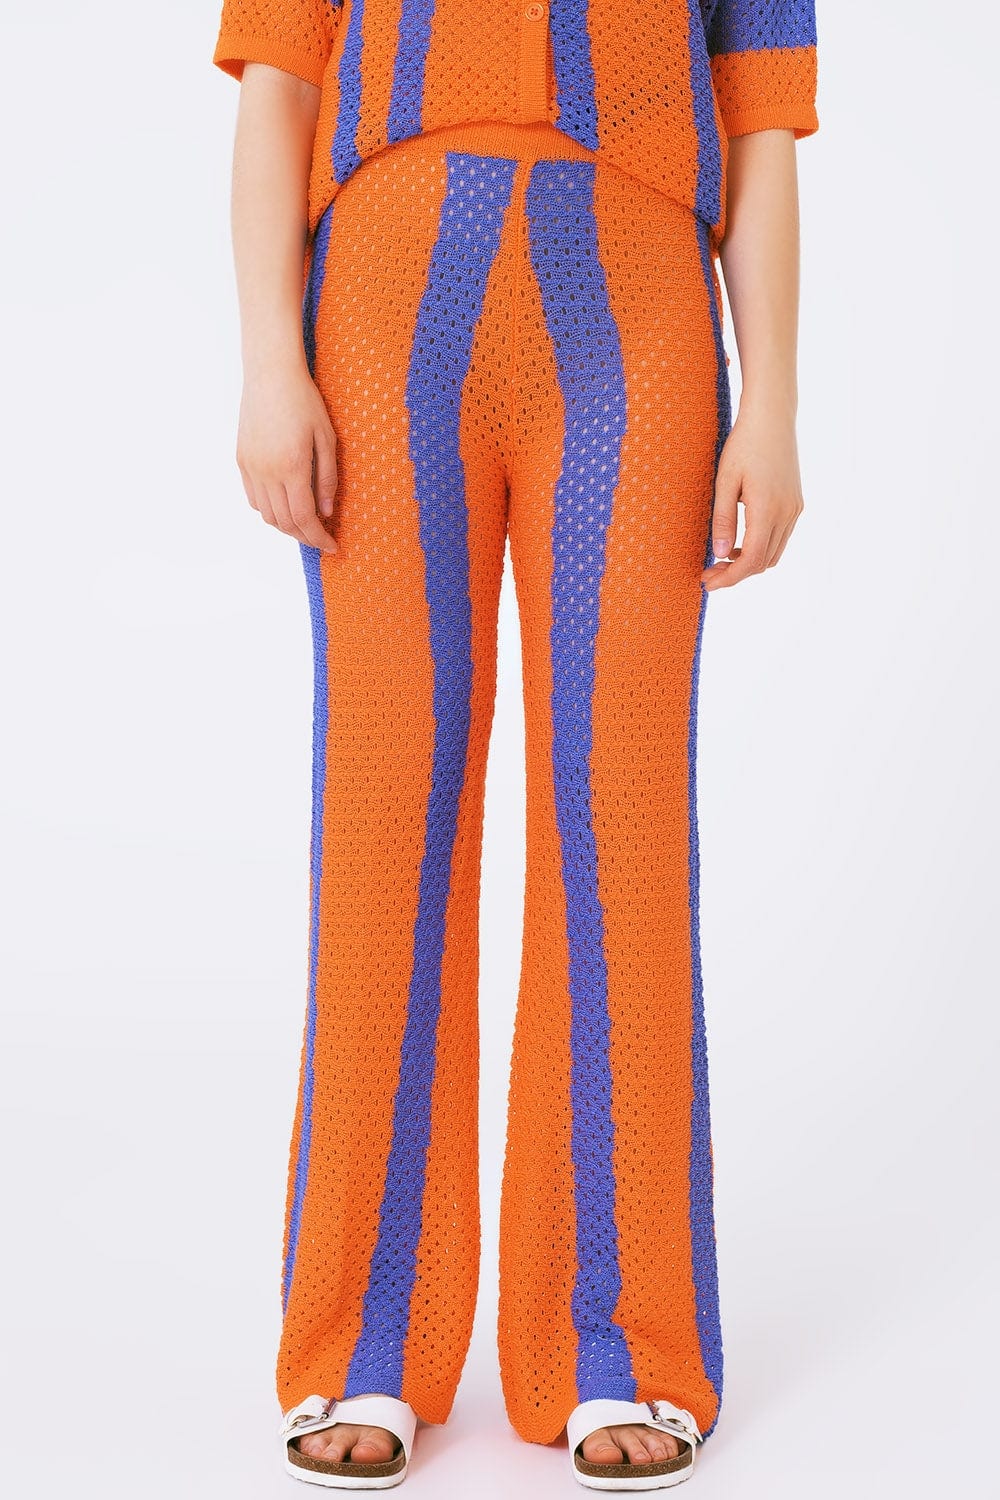 Q2 Women's Pants & Trousers One Size / Orange Orange Striped Crochet Pants